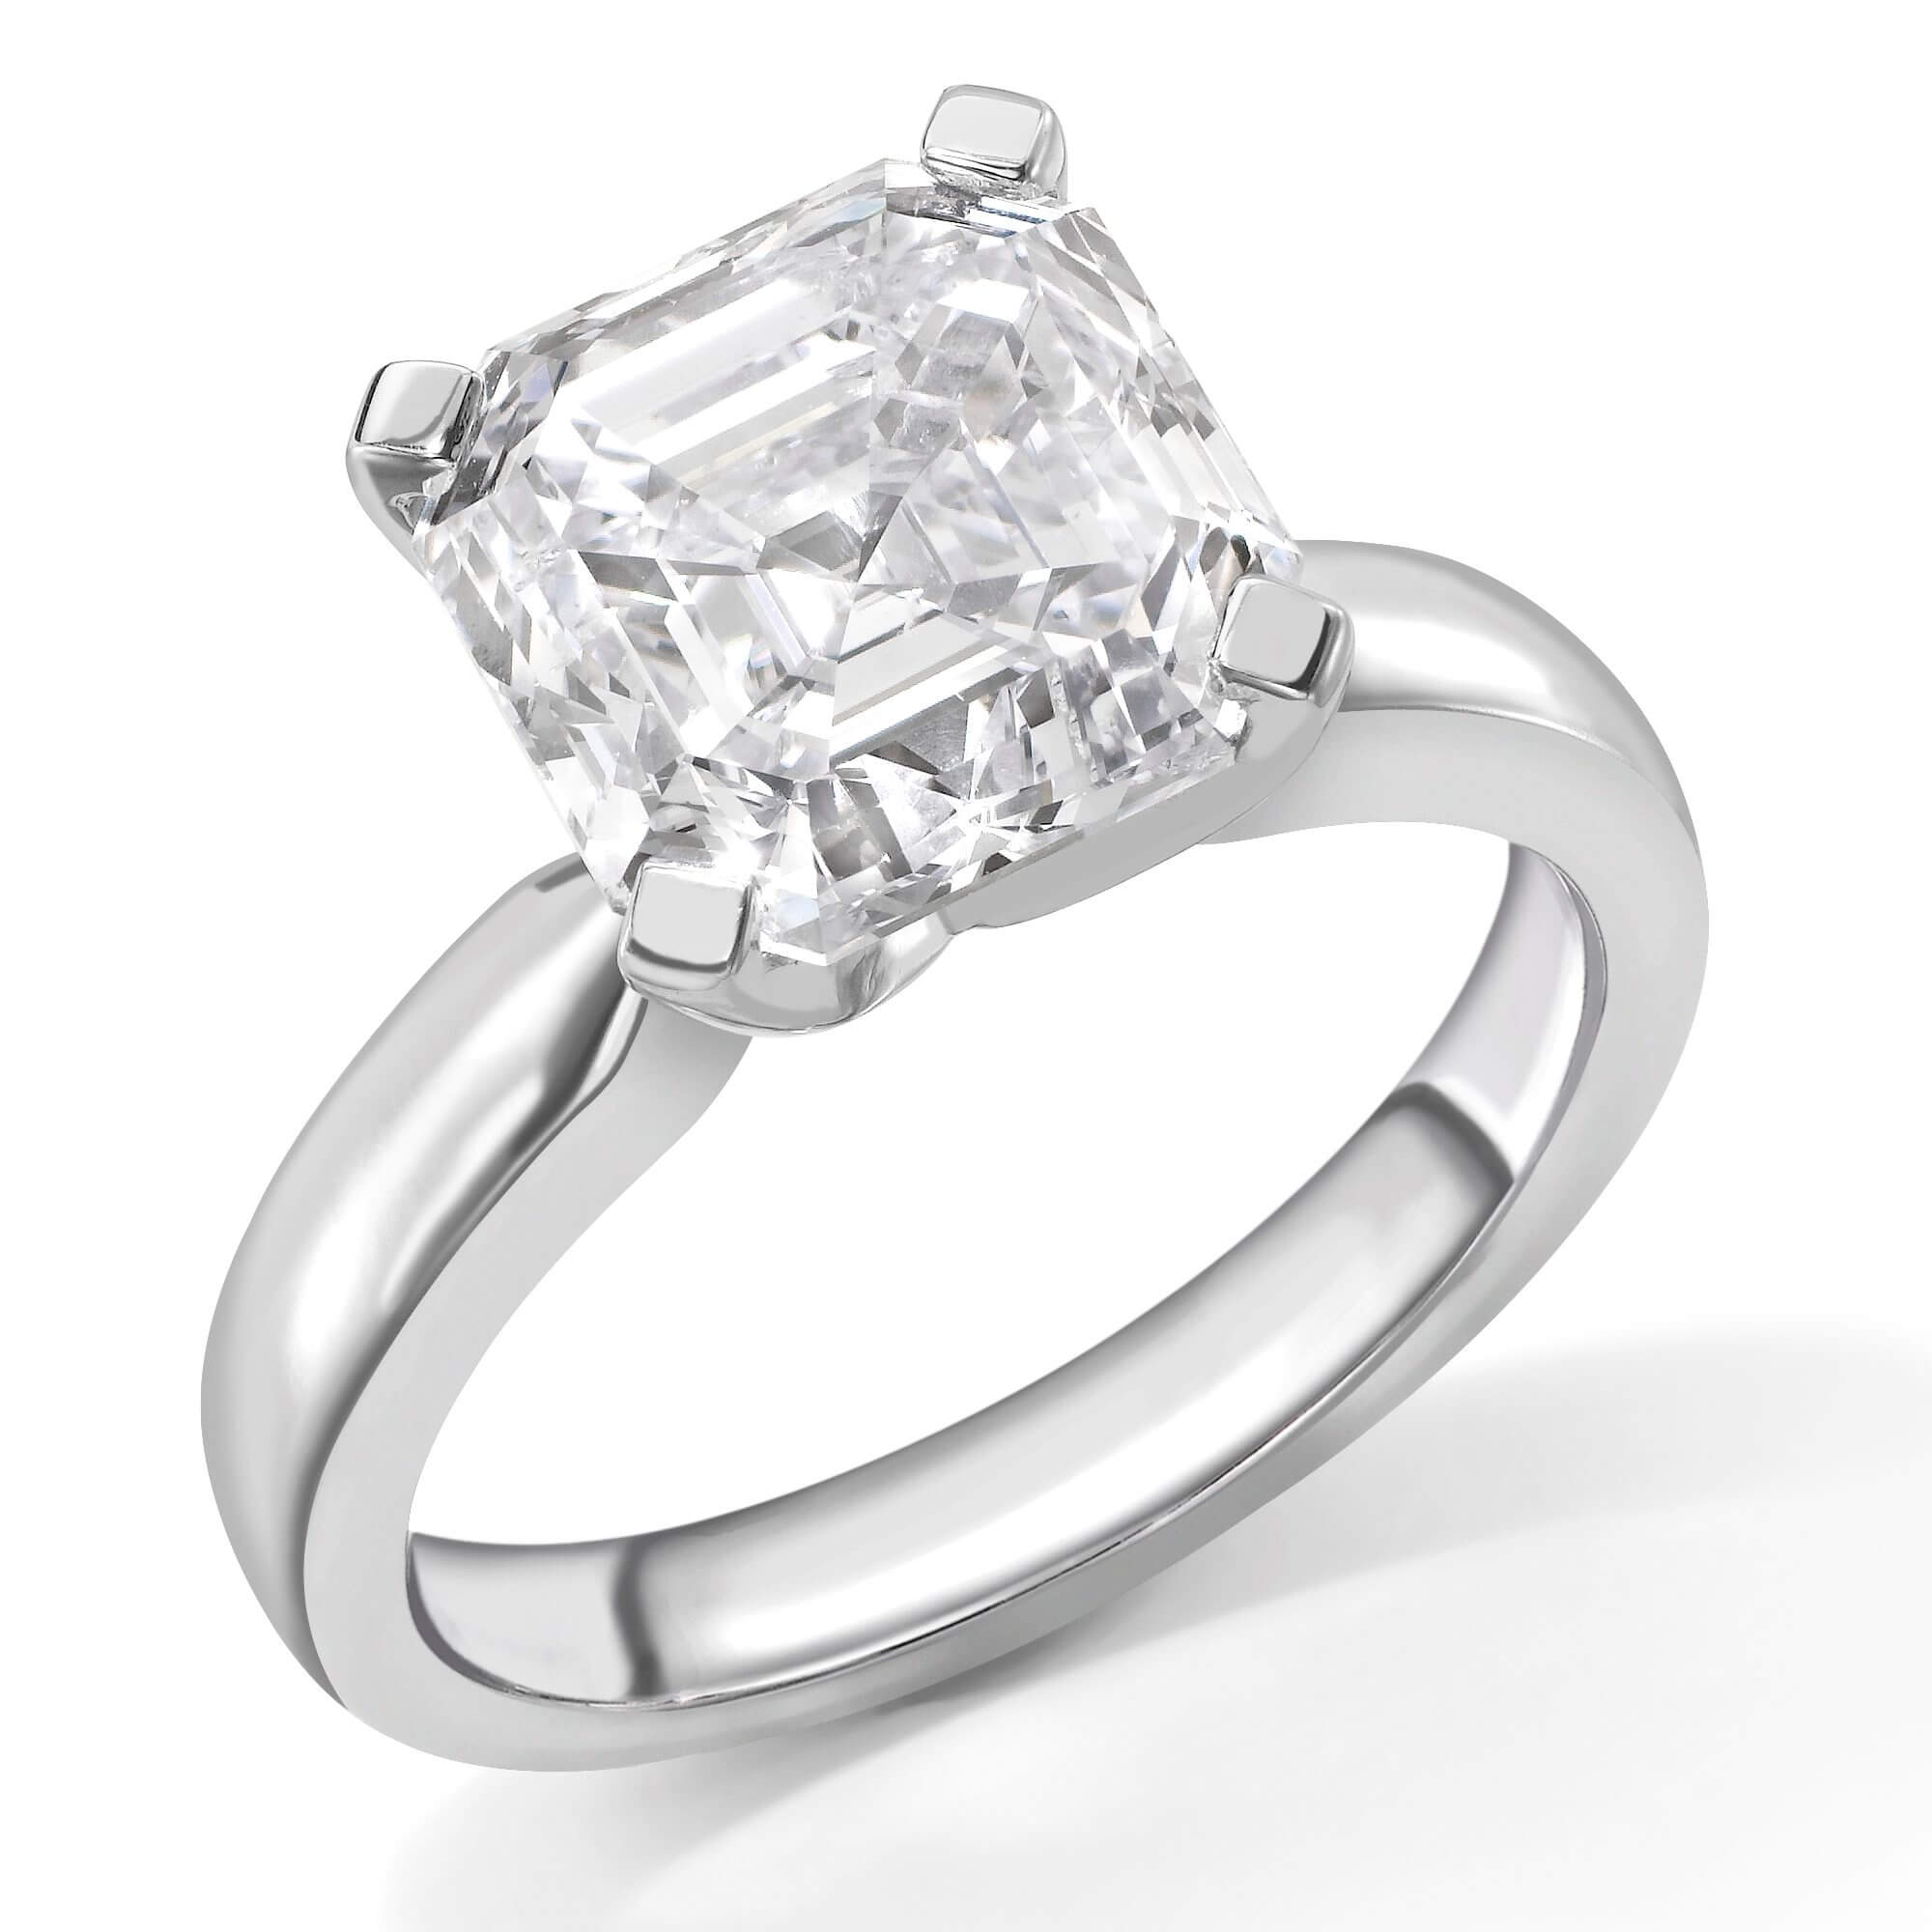 Asscher cut diamond single stone ring - The Diamond Trust